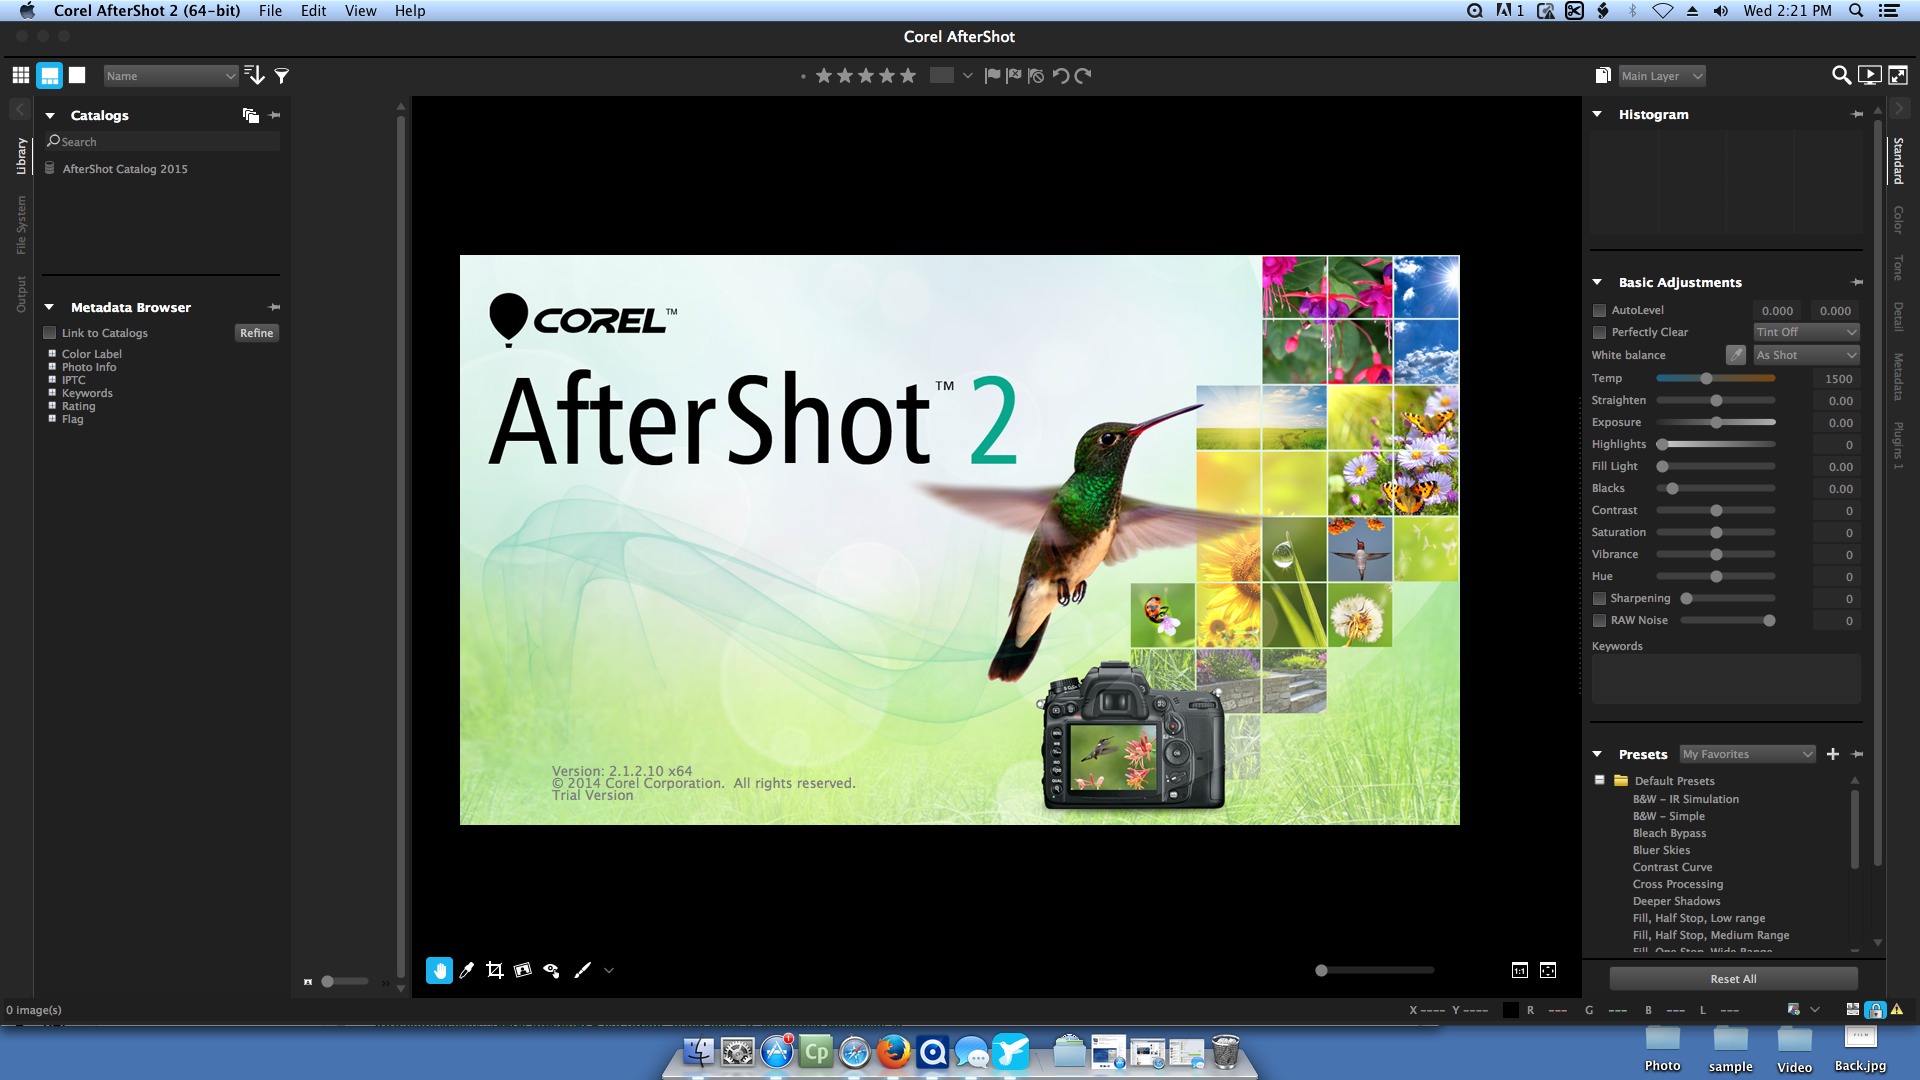 Corel AfterShot 2 2.1 : Main window